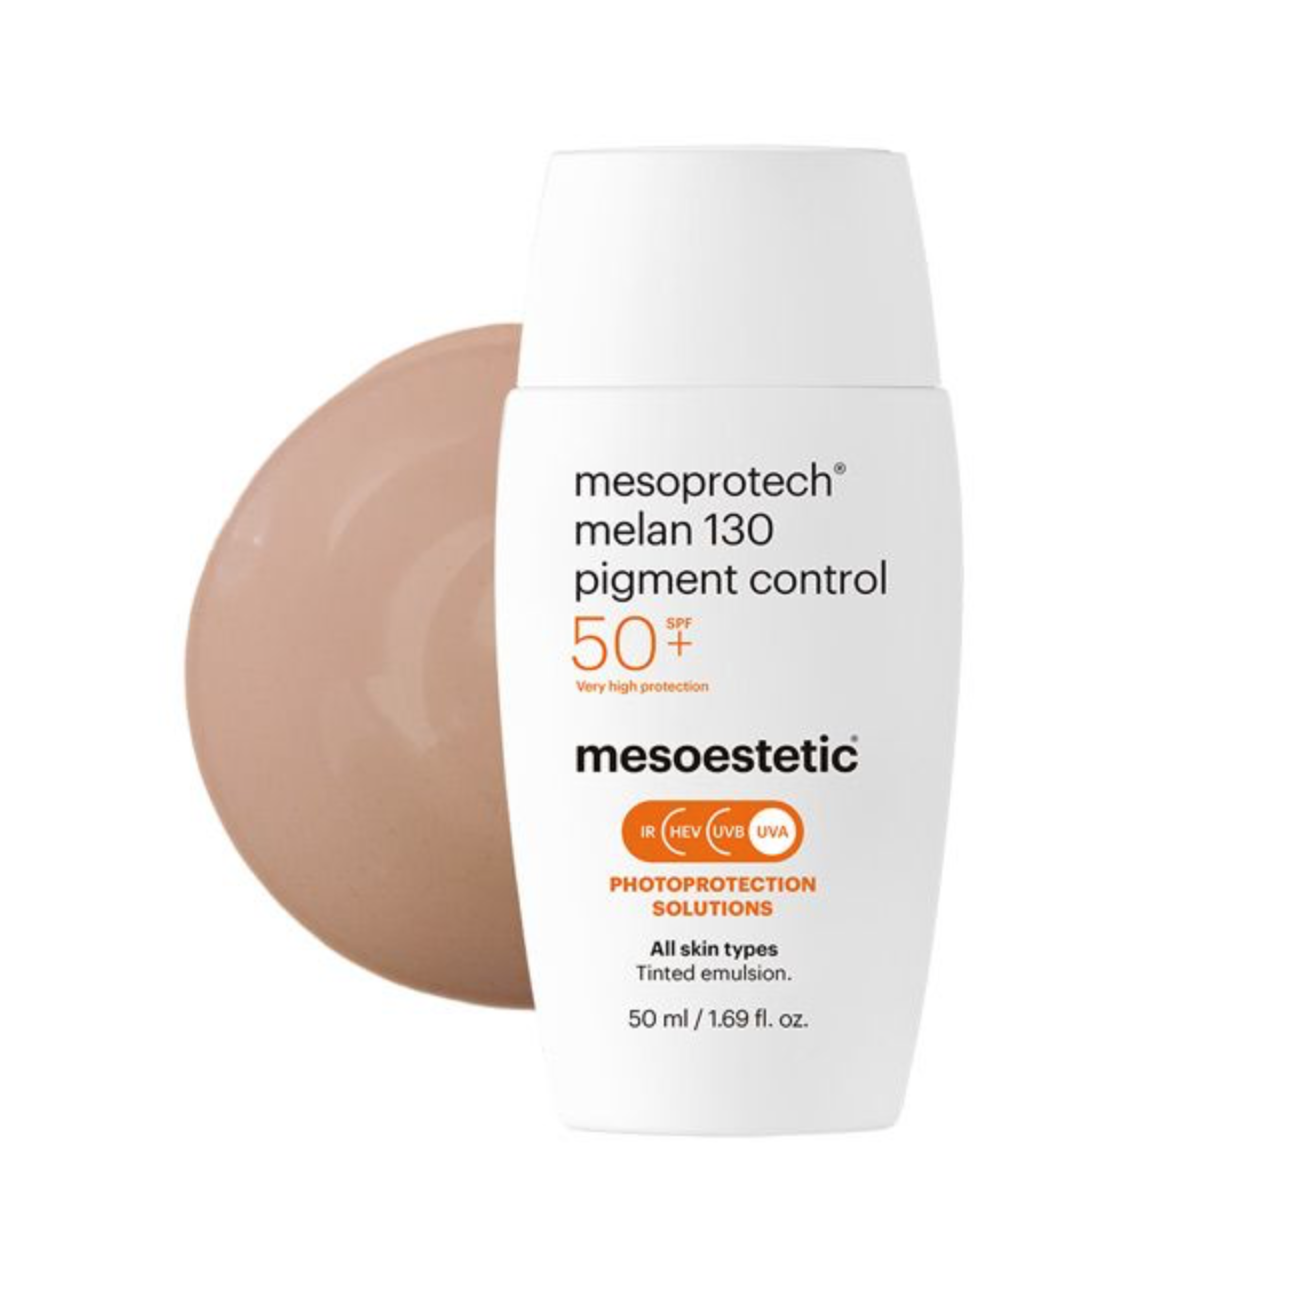 Mesoprotech melan 130+ SPF pigment control 50ml